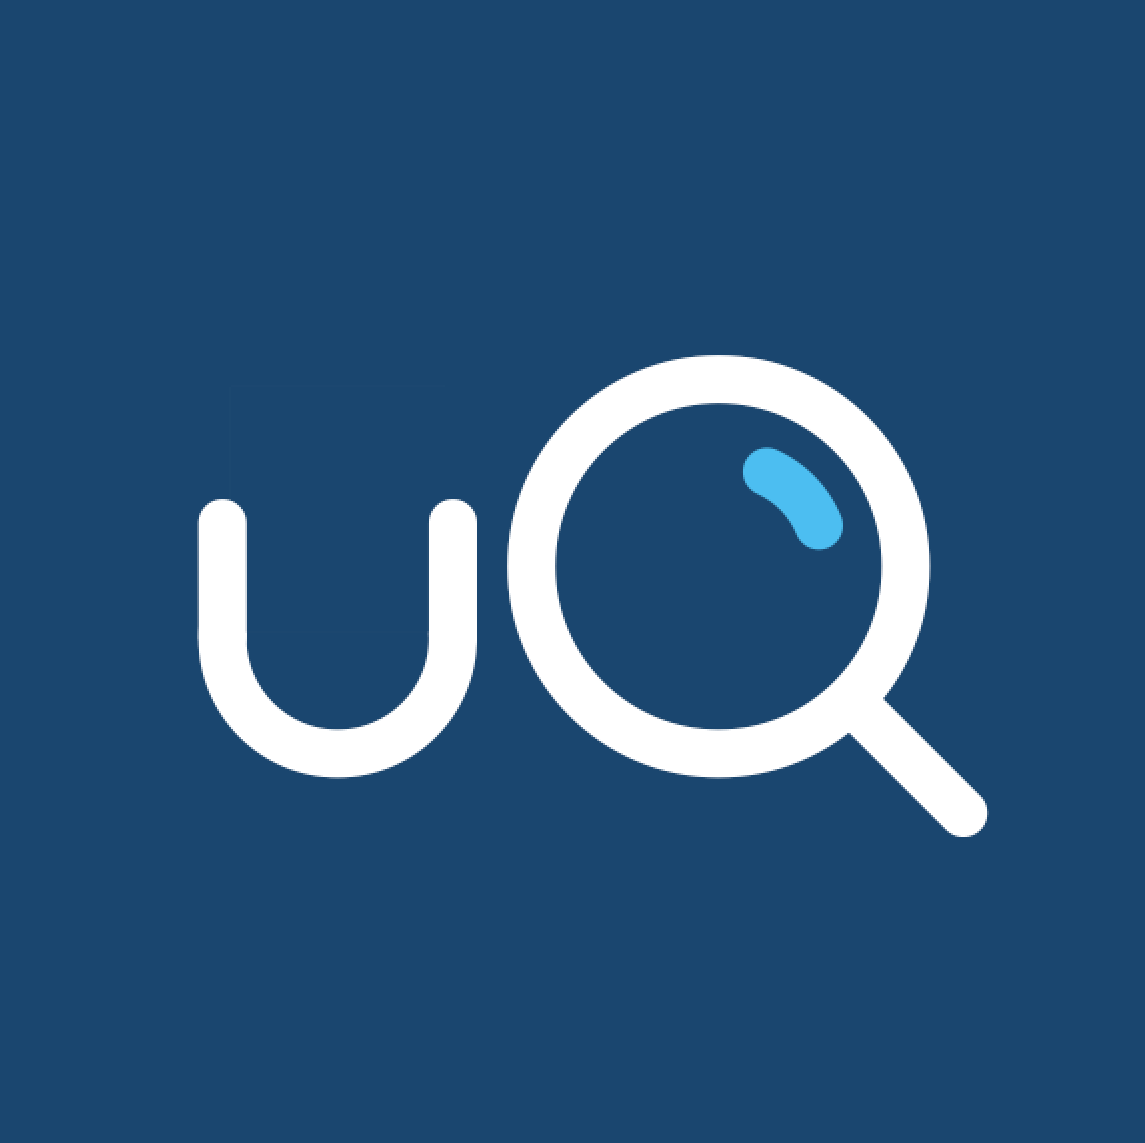 uquote Logo